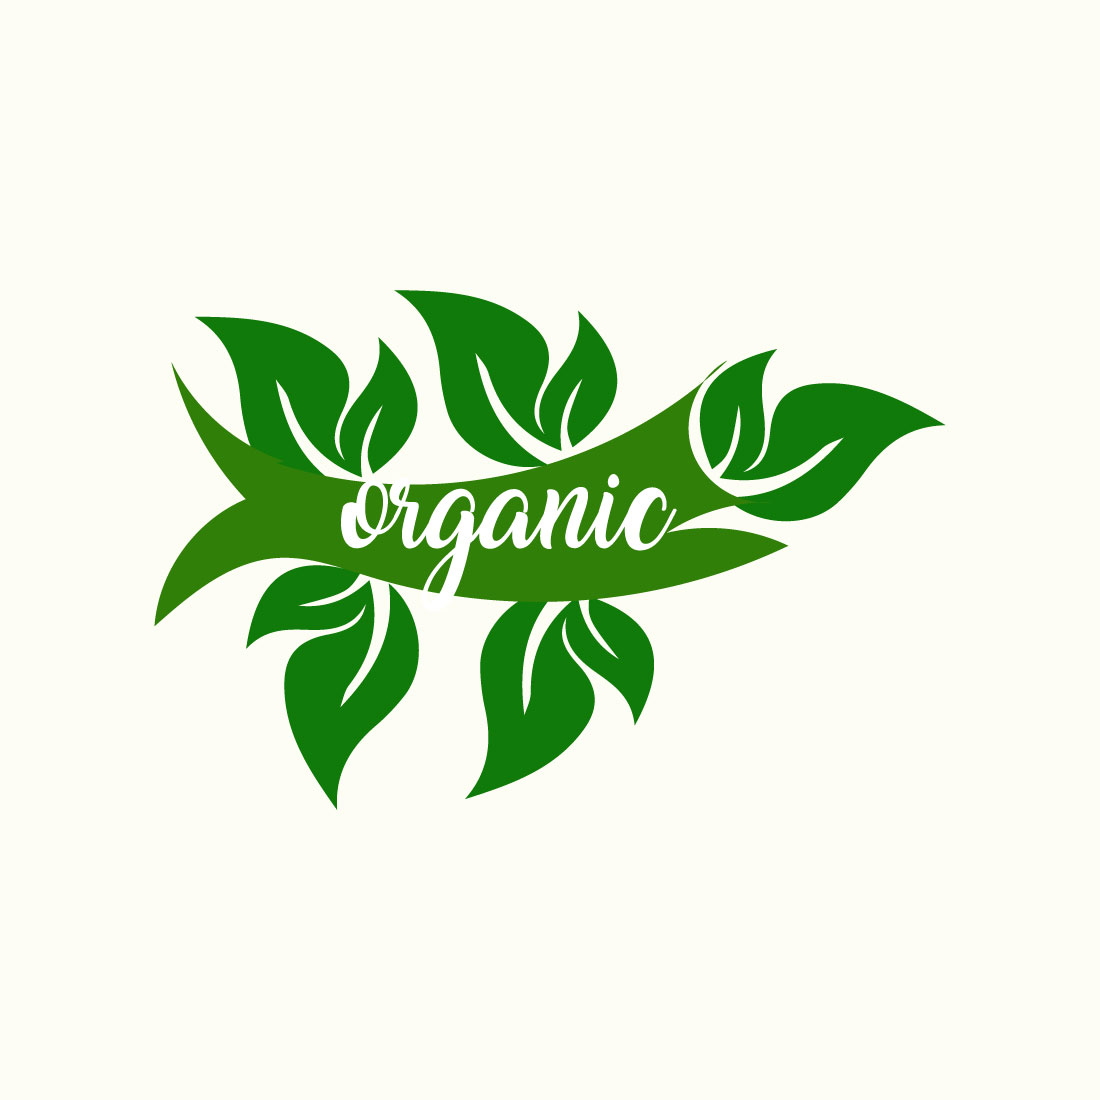 Free organic label logo cover image.